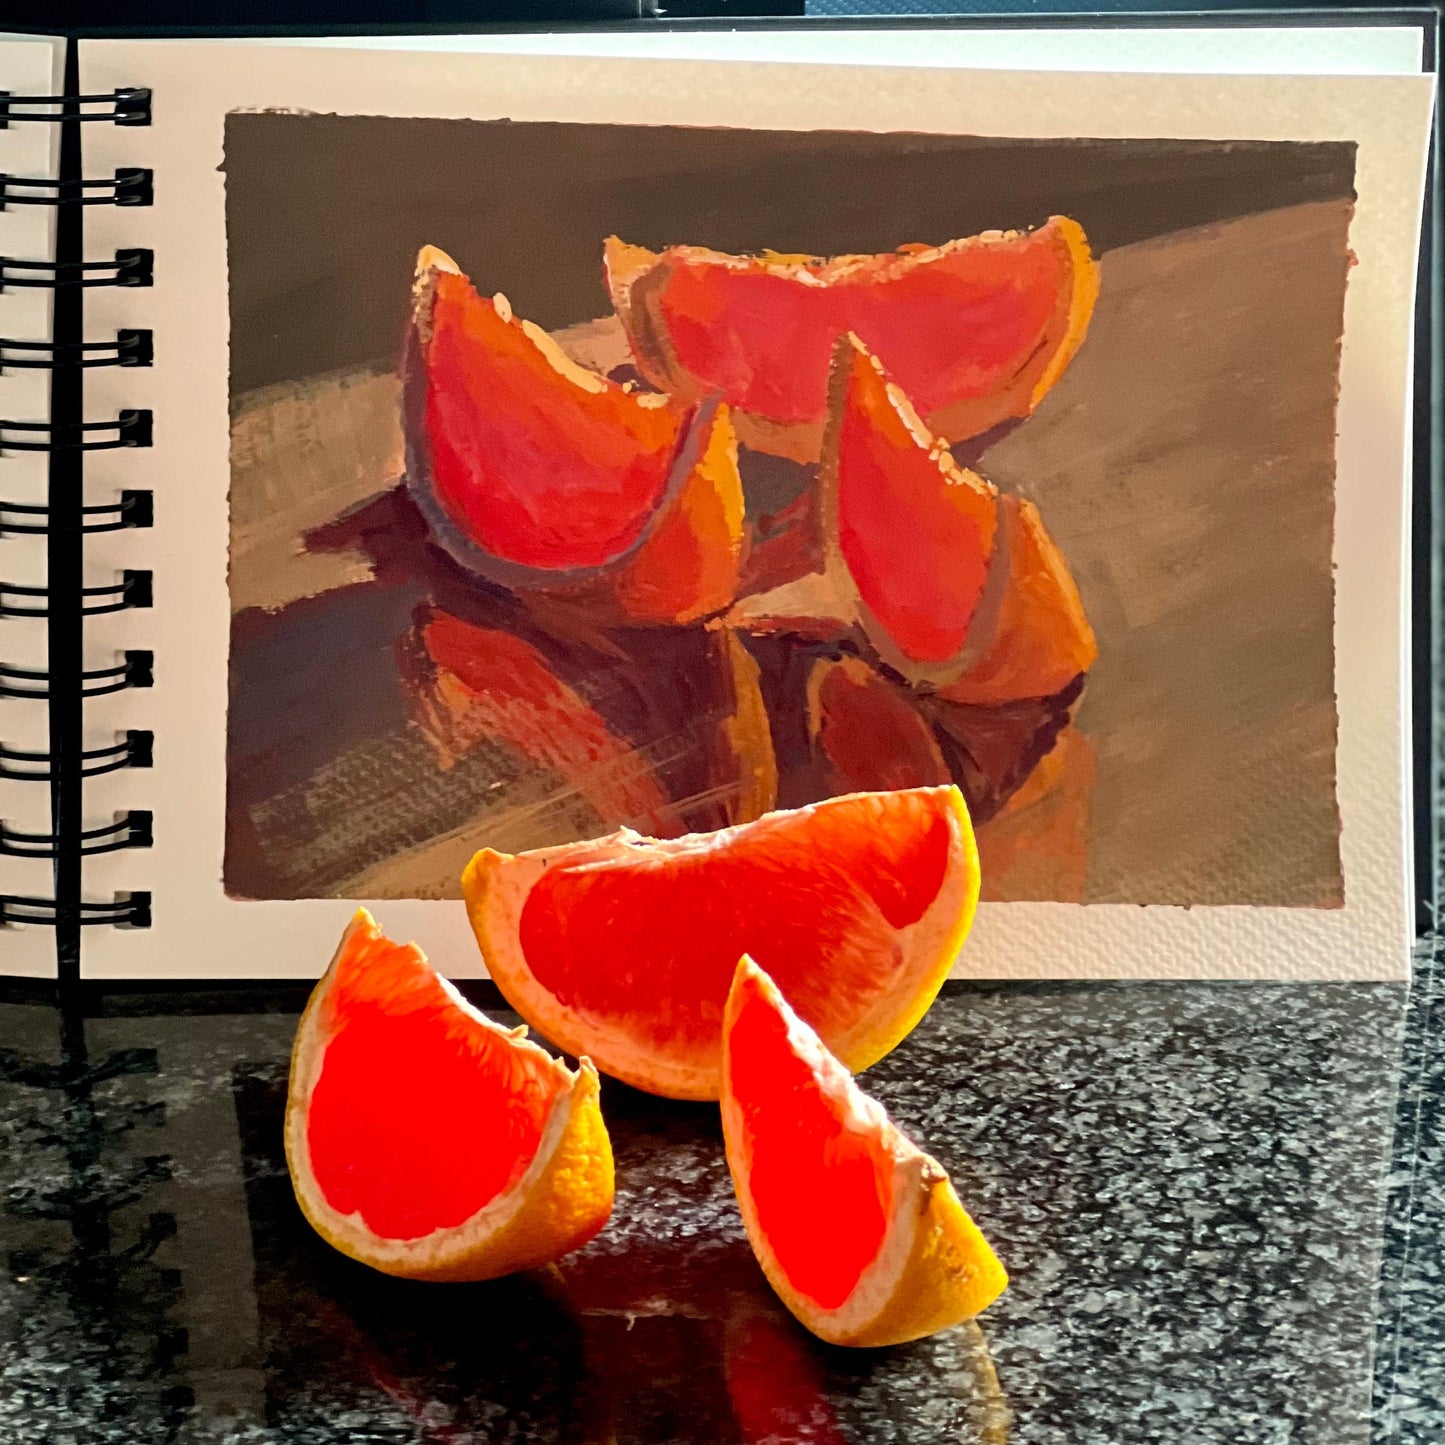 Gouache Painting - Grapefruit Slices Close up